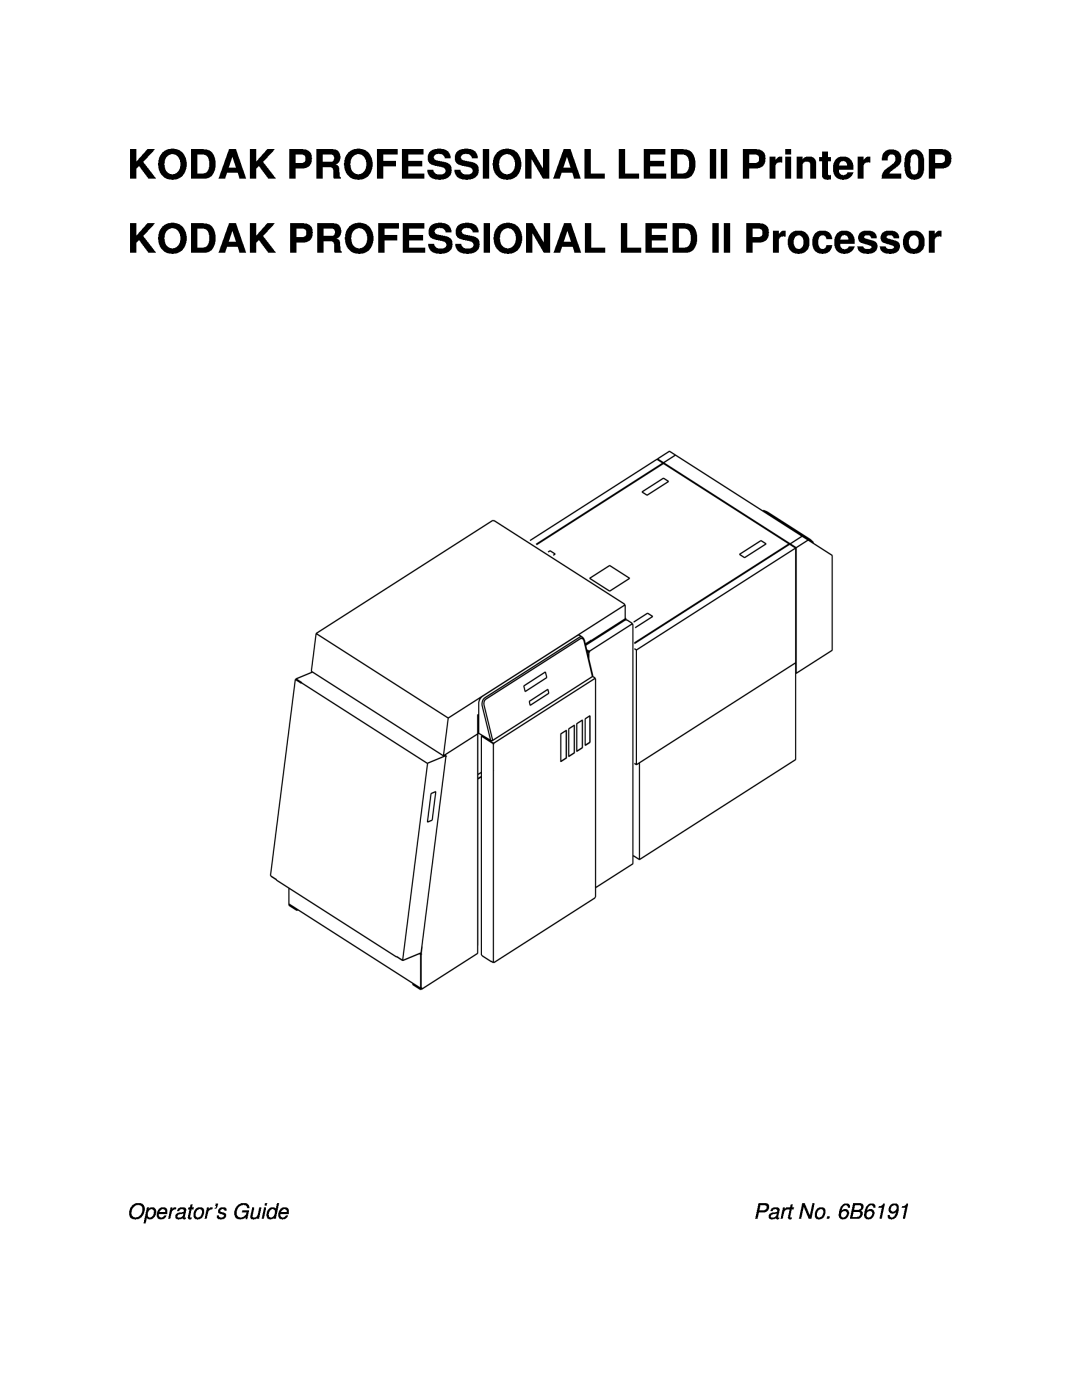 Kodak manual Operator’s Guide, Part No. 6B6191, KODAK PROFESSIONAL LED II Printer 20P 